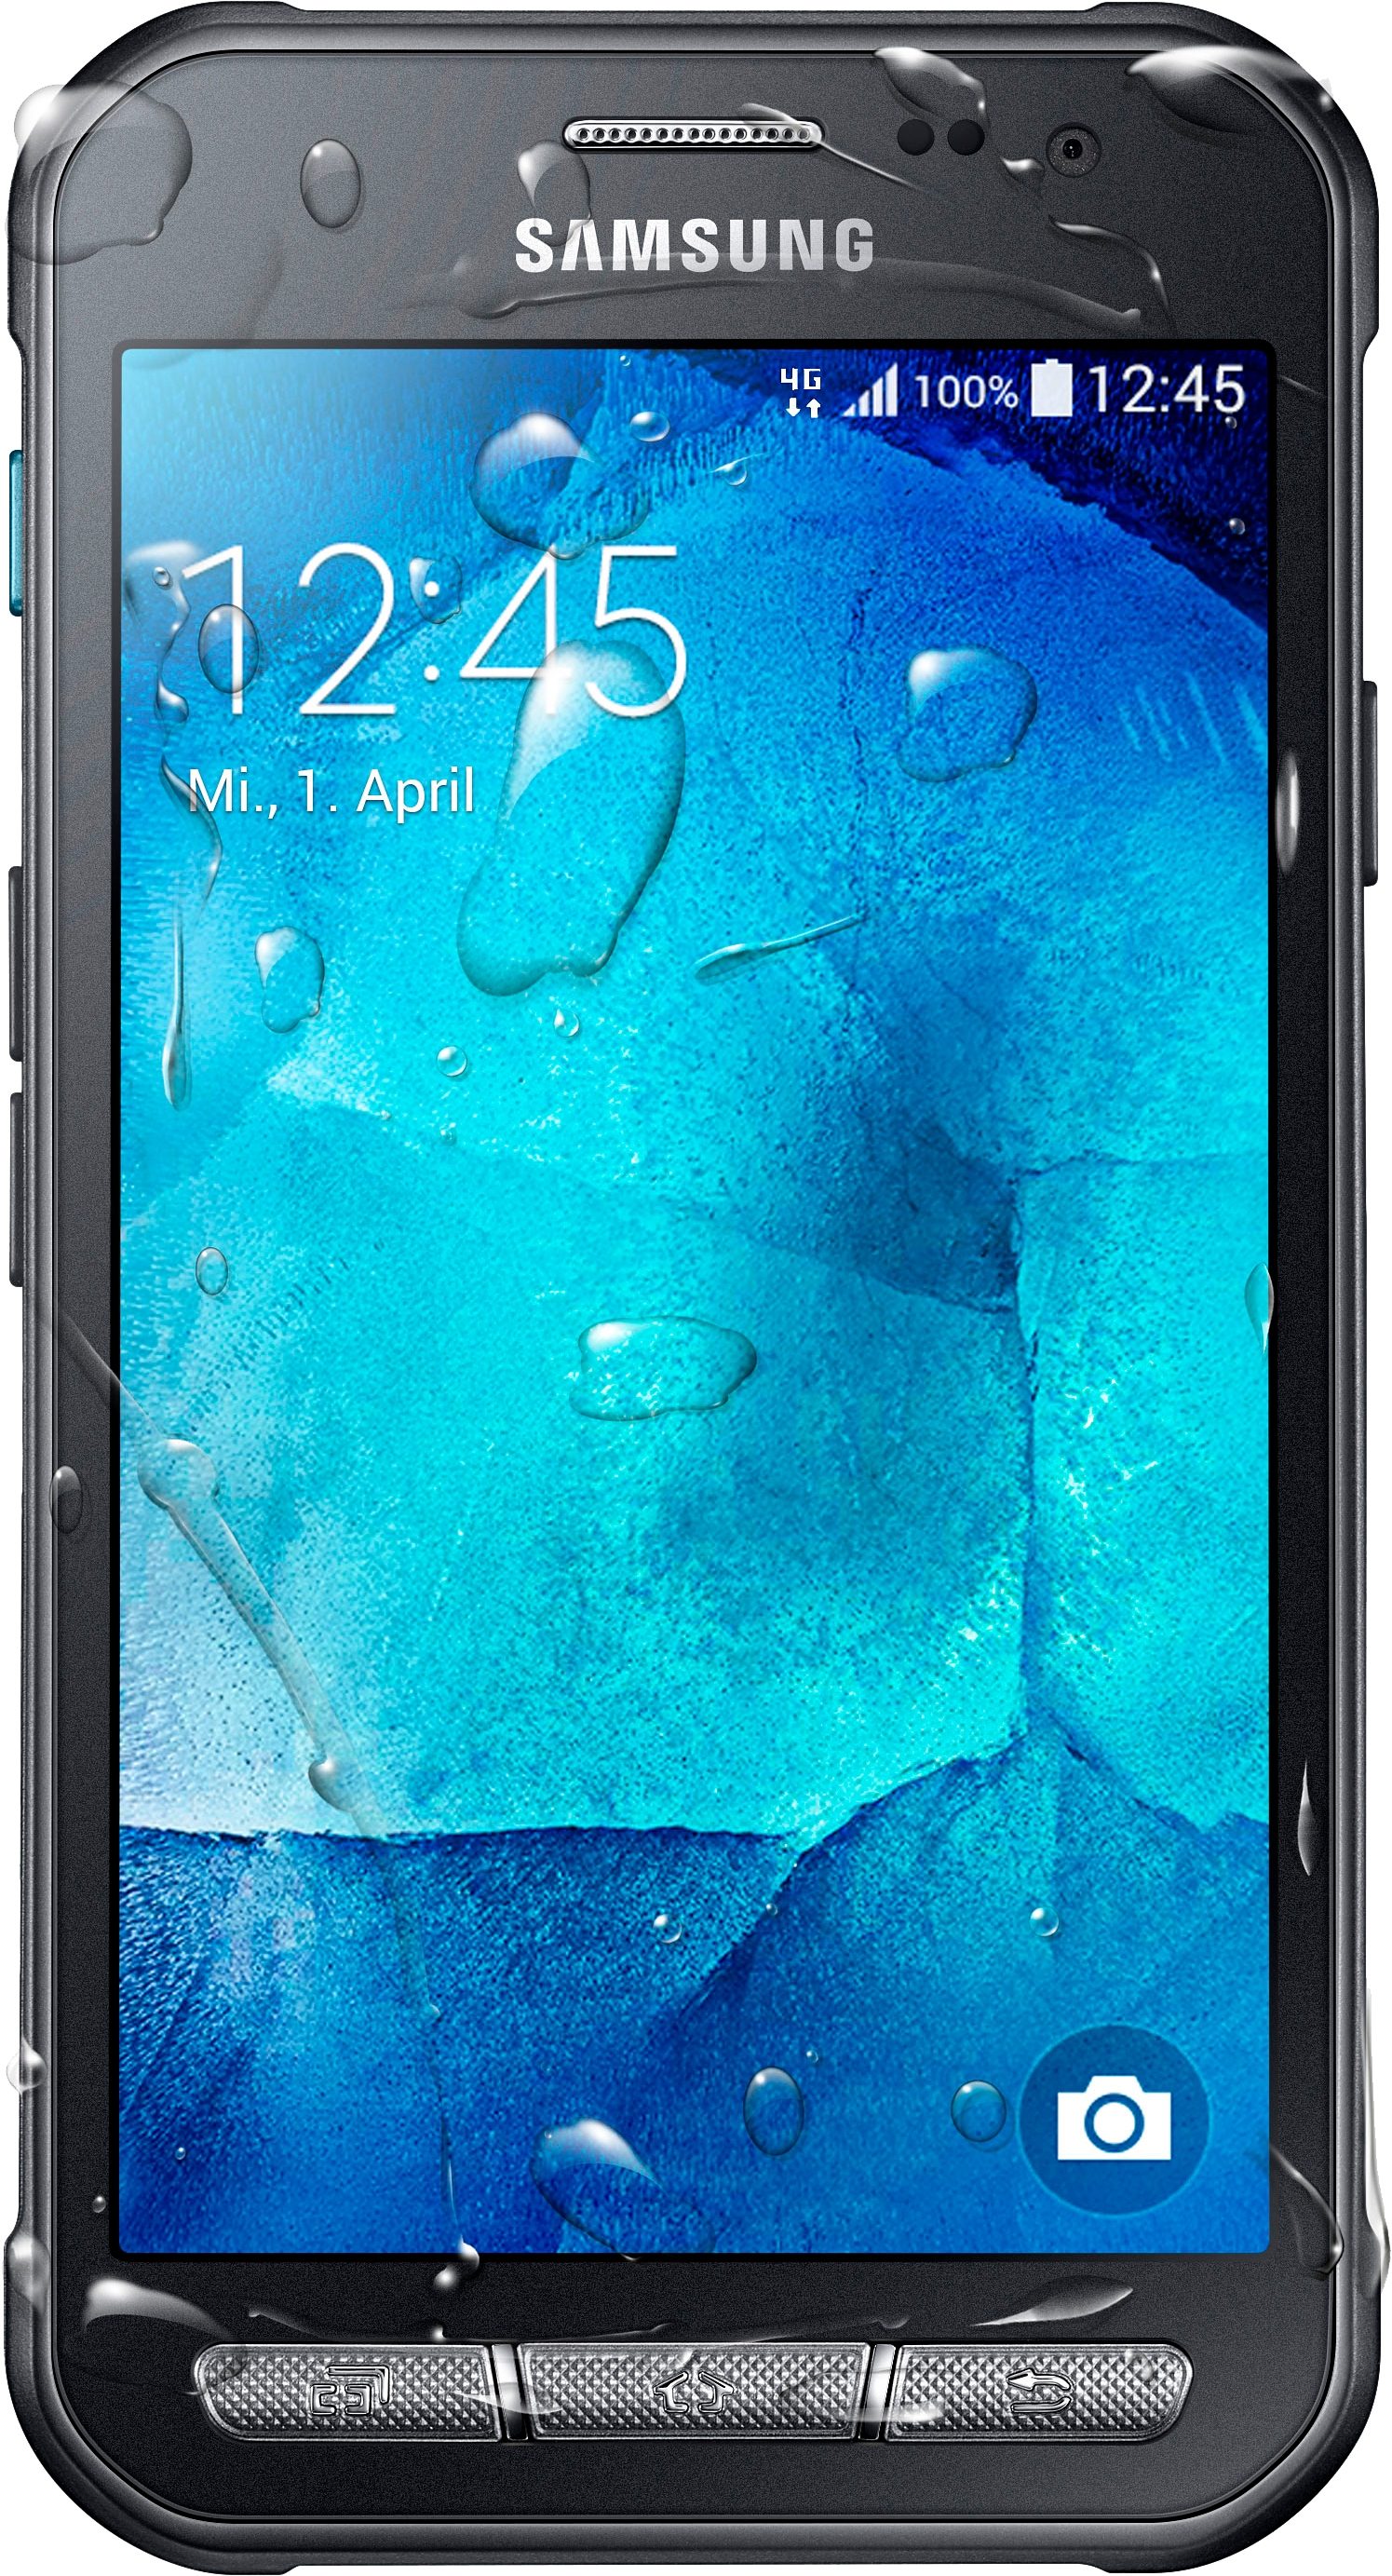 Samsung Galaxy Xcover 3 Smartphone, 11,4 cm (4,5 Zoll) Display, LTE (4G